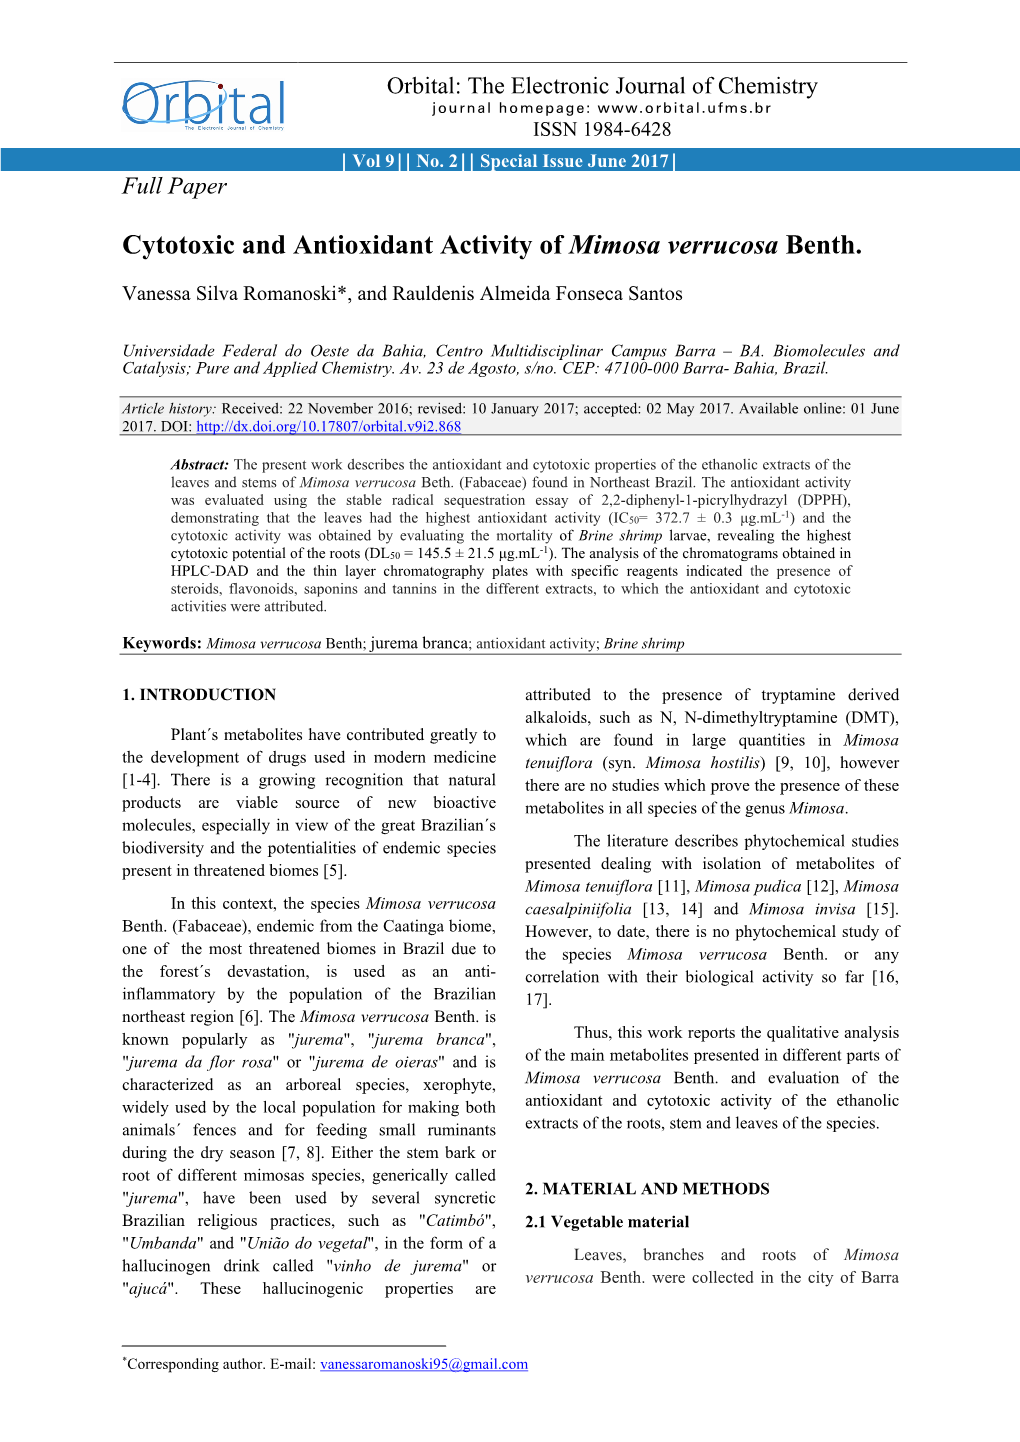 Ytotoxic and Antioxidant Activity of Mimosa Verrucosa Benth